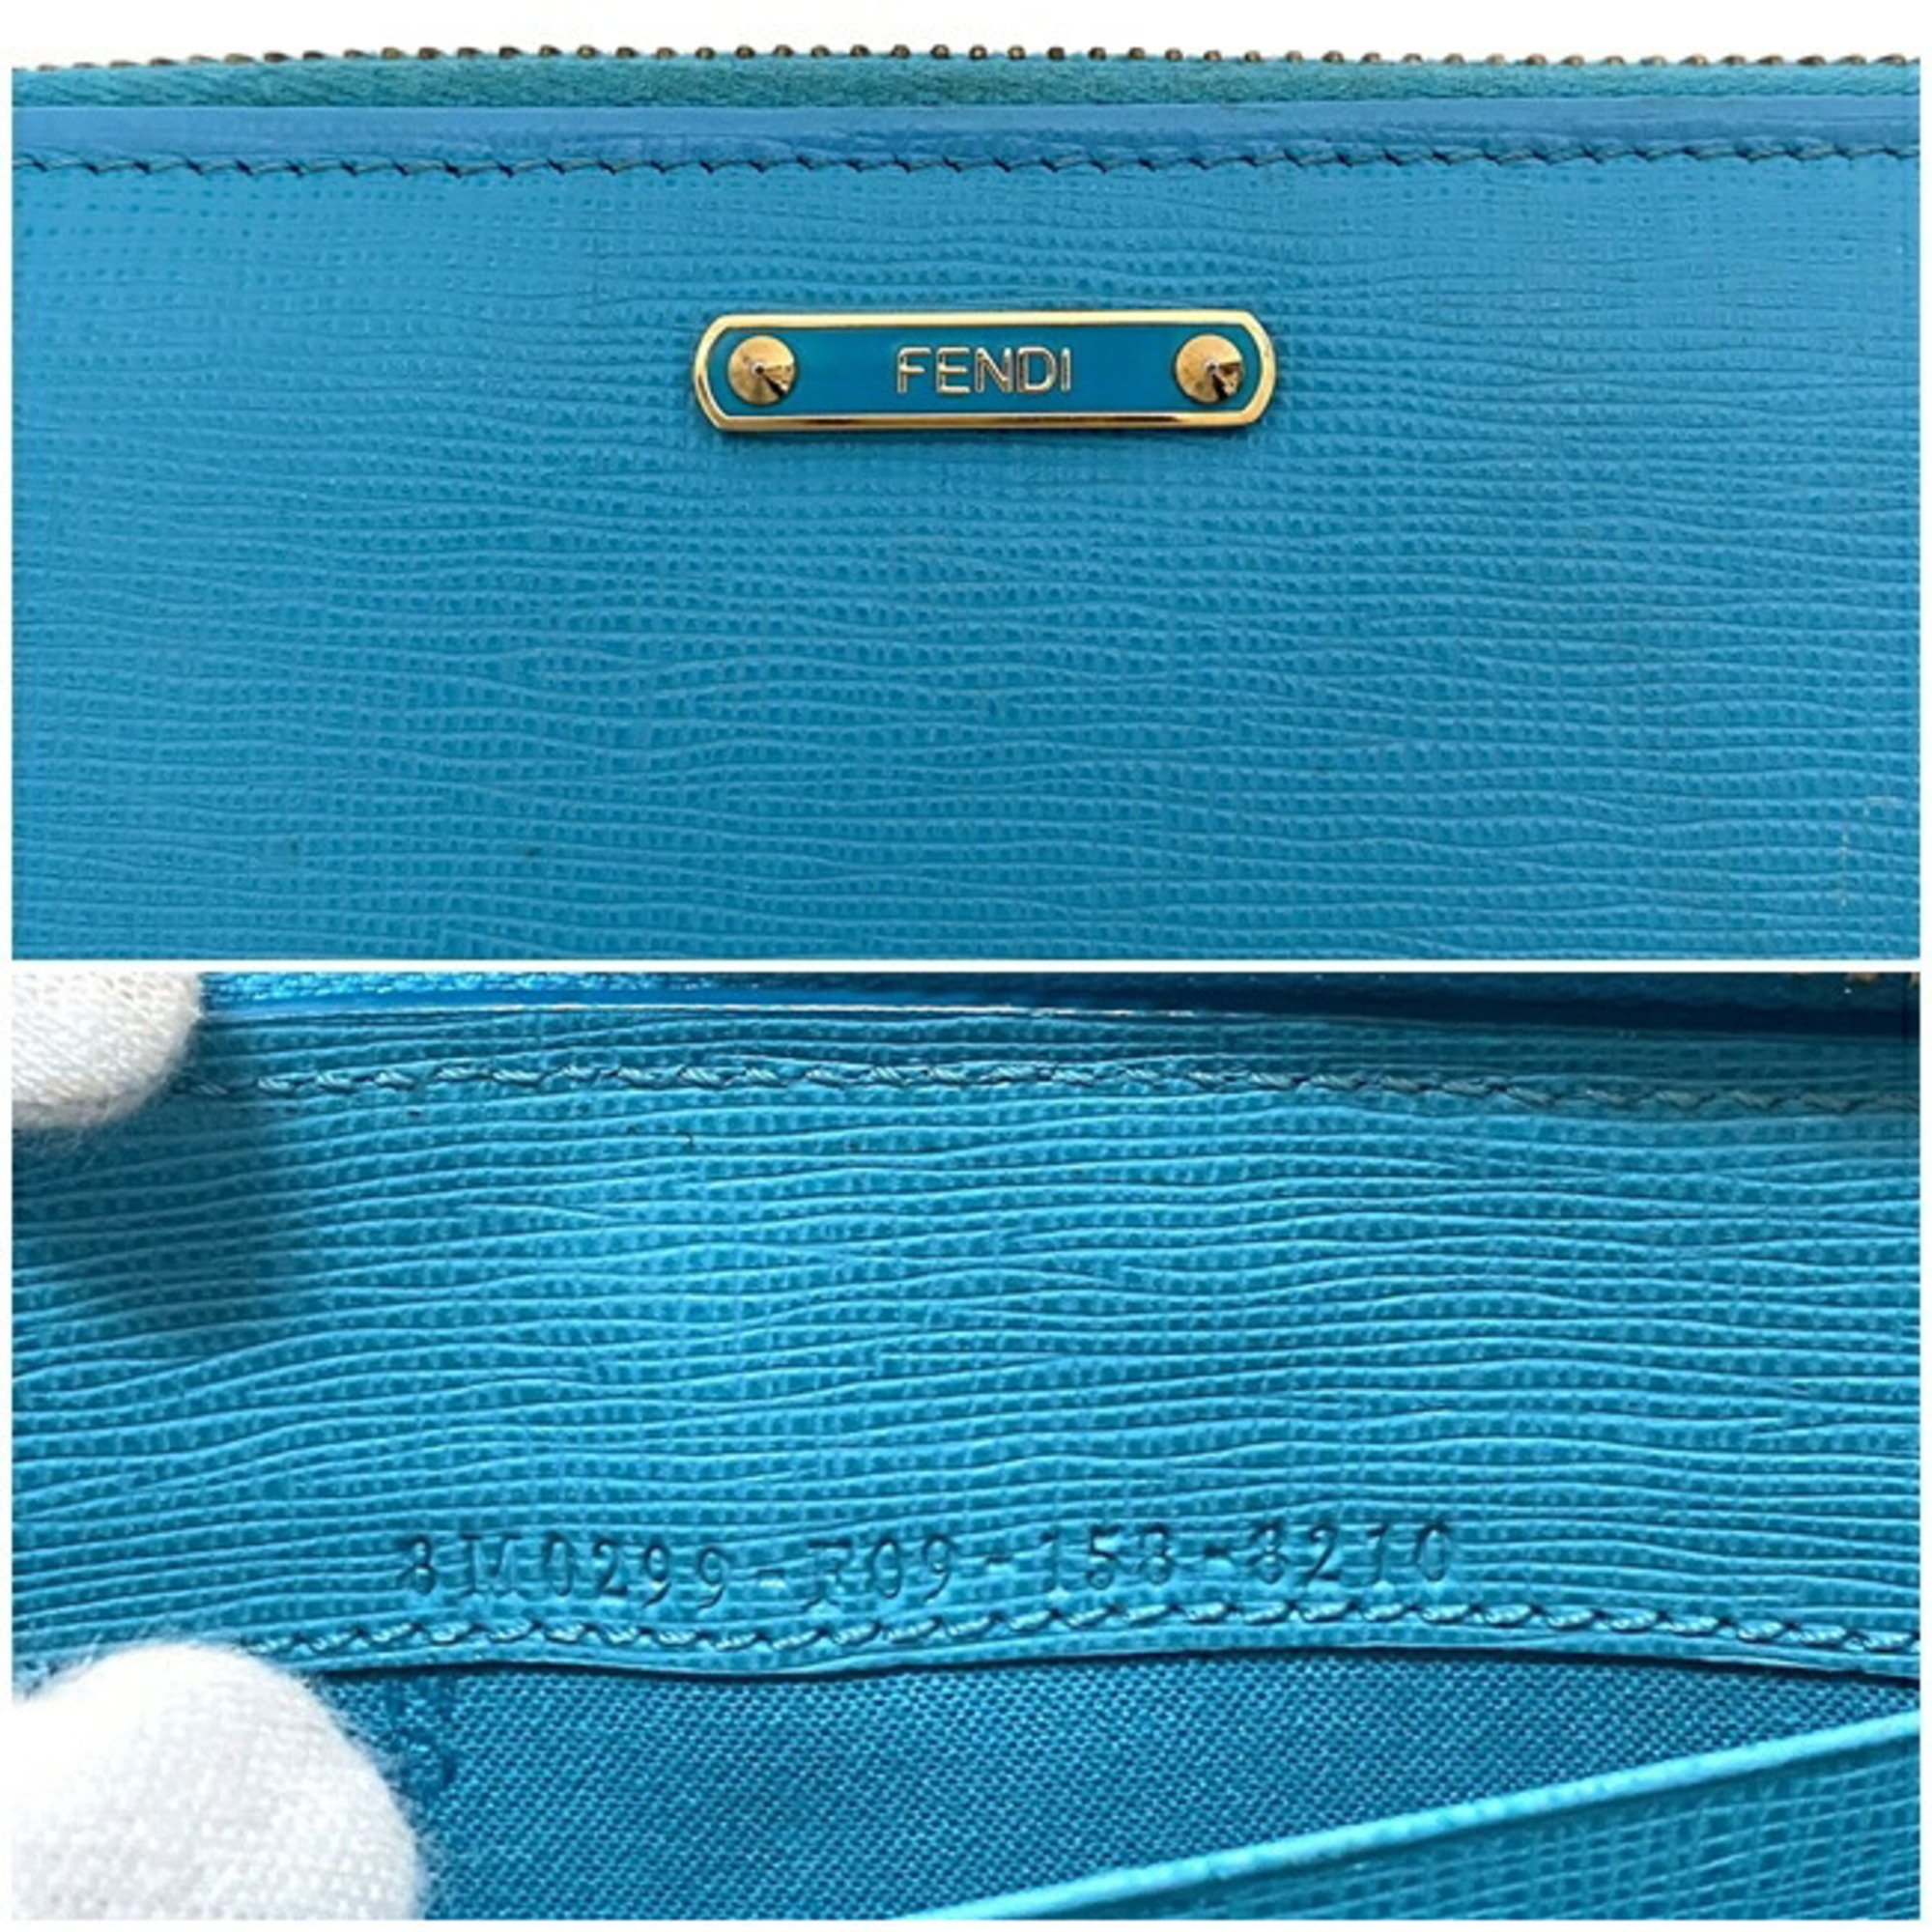 Fendi Round Long Wallet Light Blue 8M0299 Leather FENDI Women's Plate